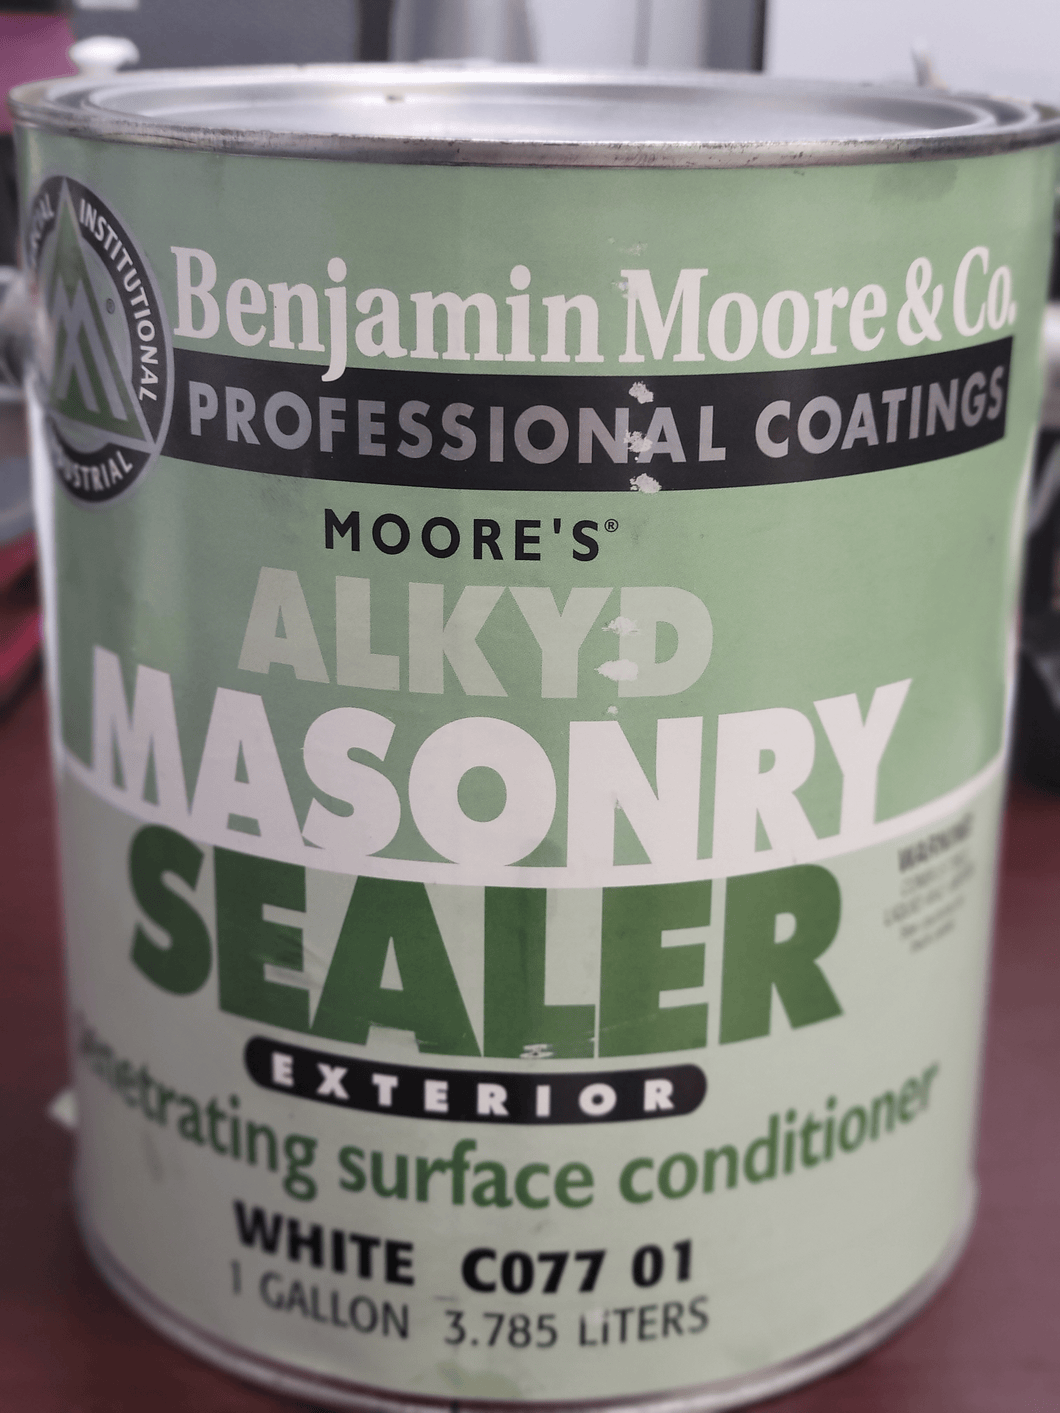 Moore's Alkyd Masonry Sealer Exterior Penetrating Surface Conditioner